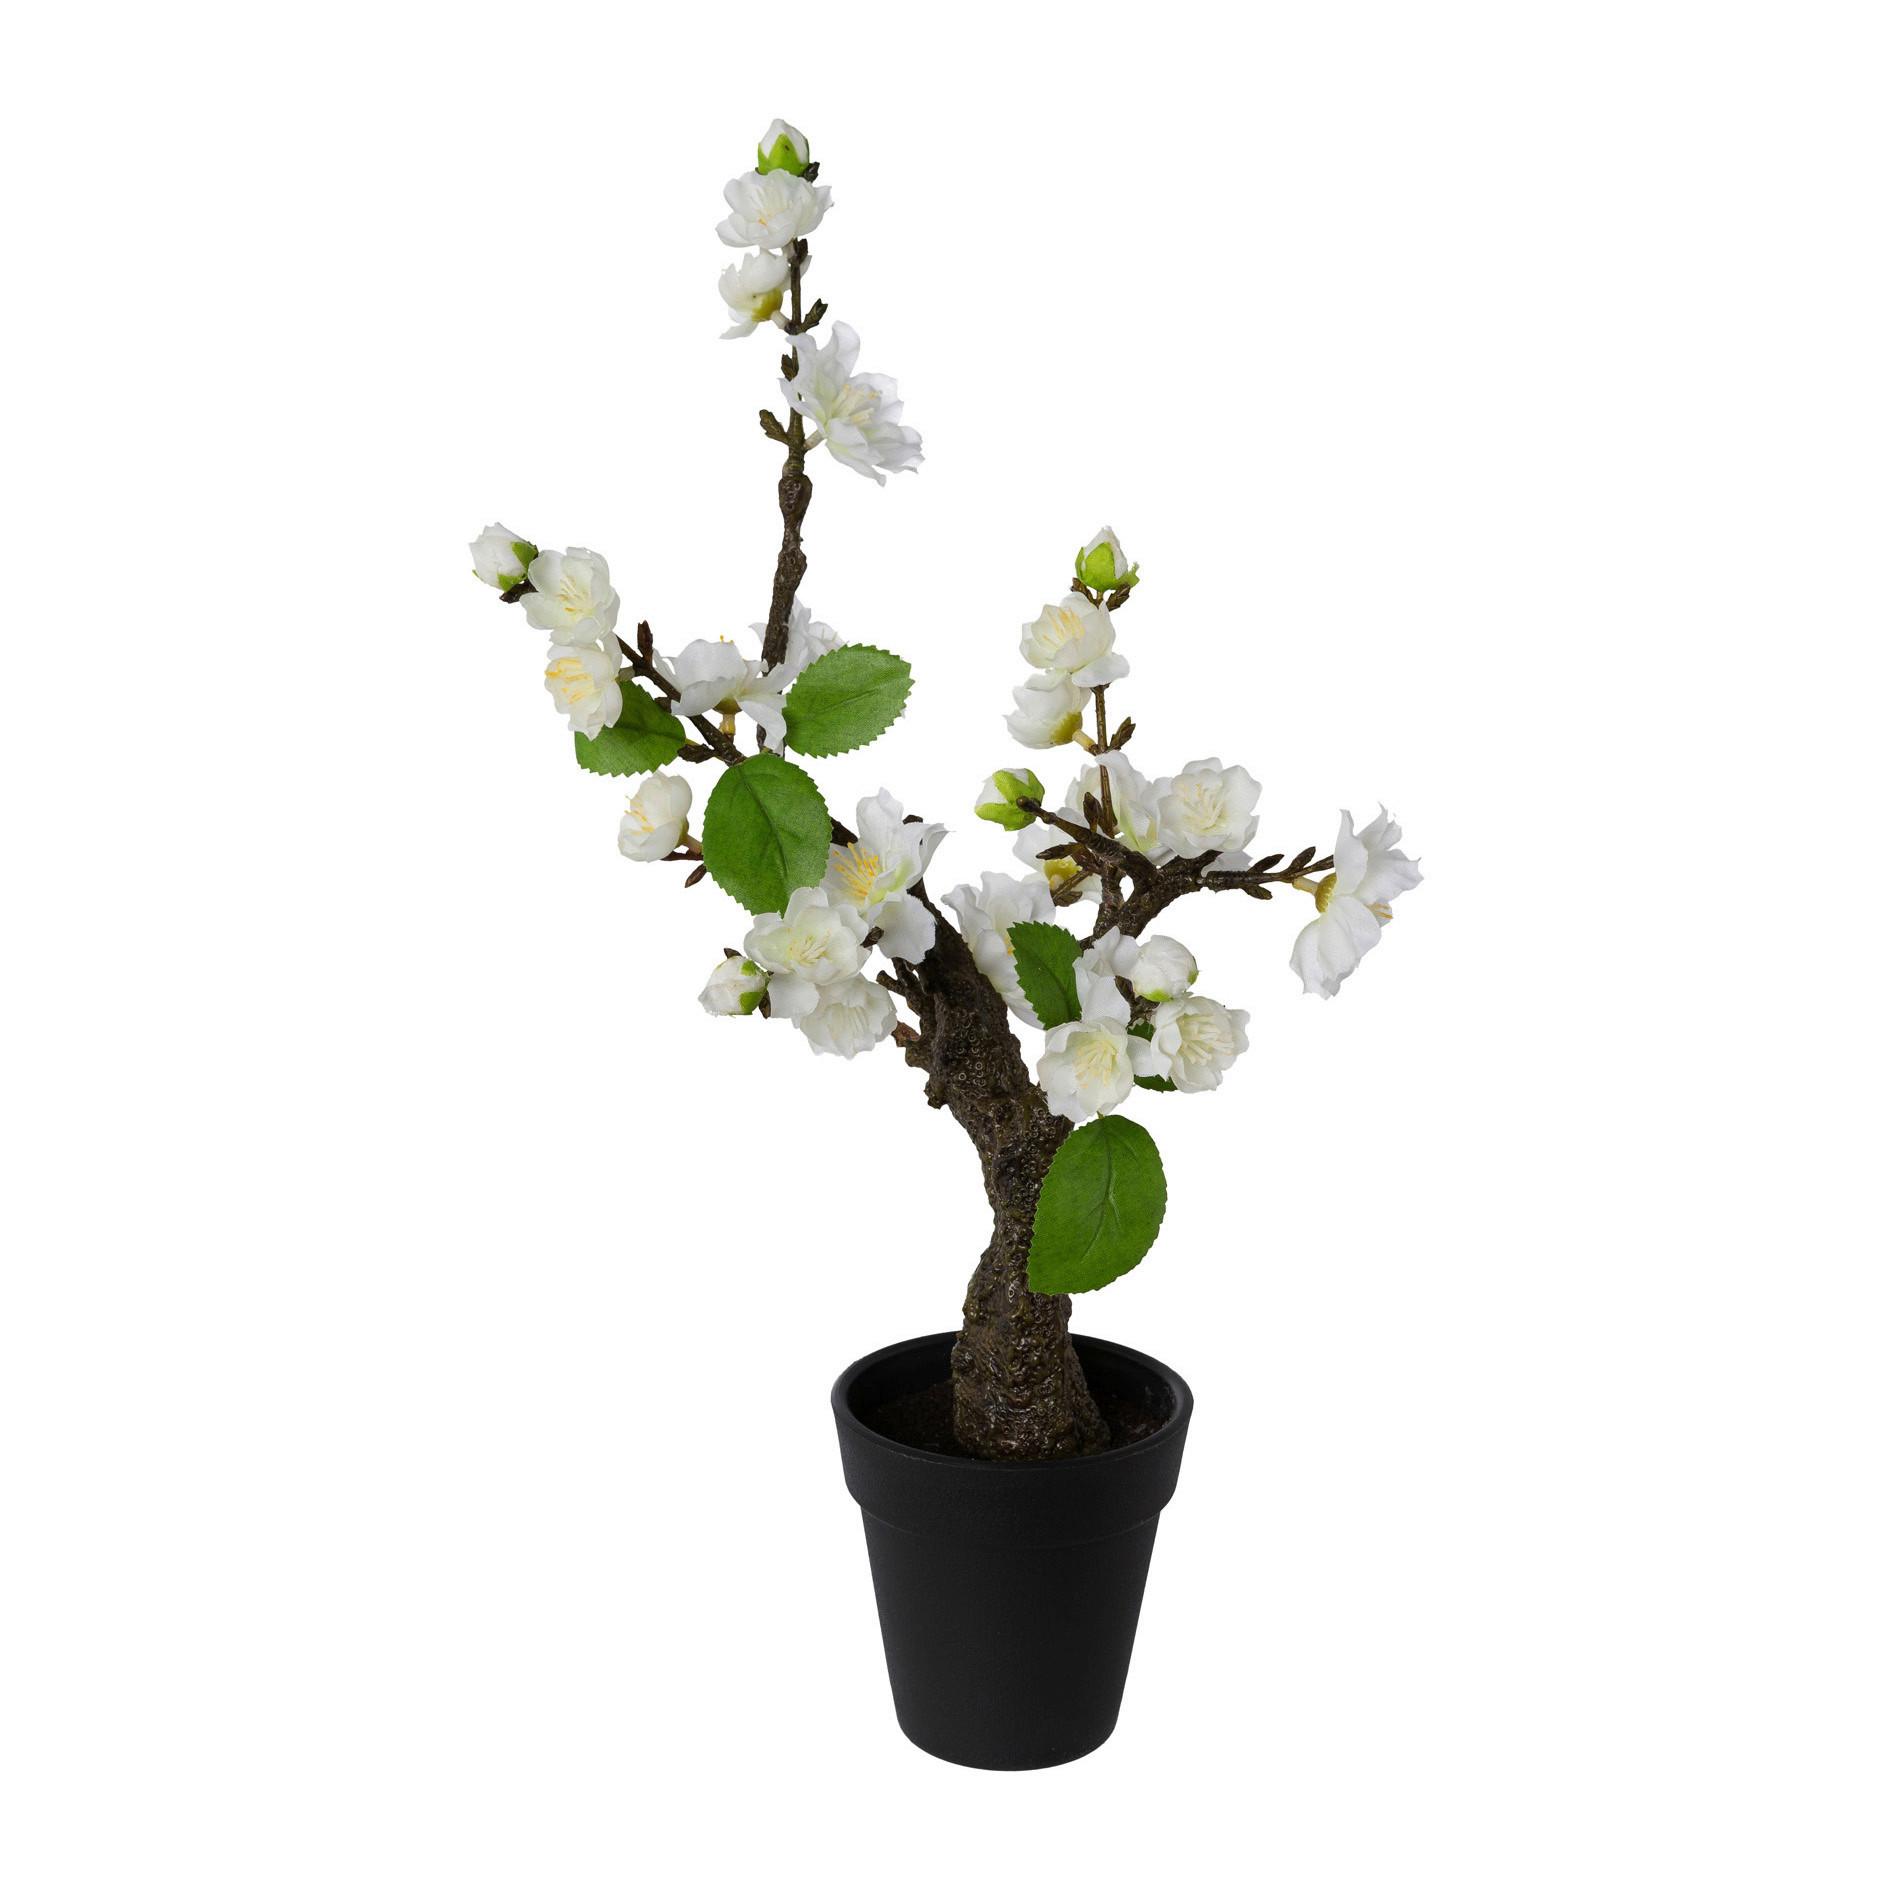 Műnövény White Bonsai - Zöld/Fehér, Basics, Műanyag (32cm) - Modern Living